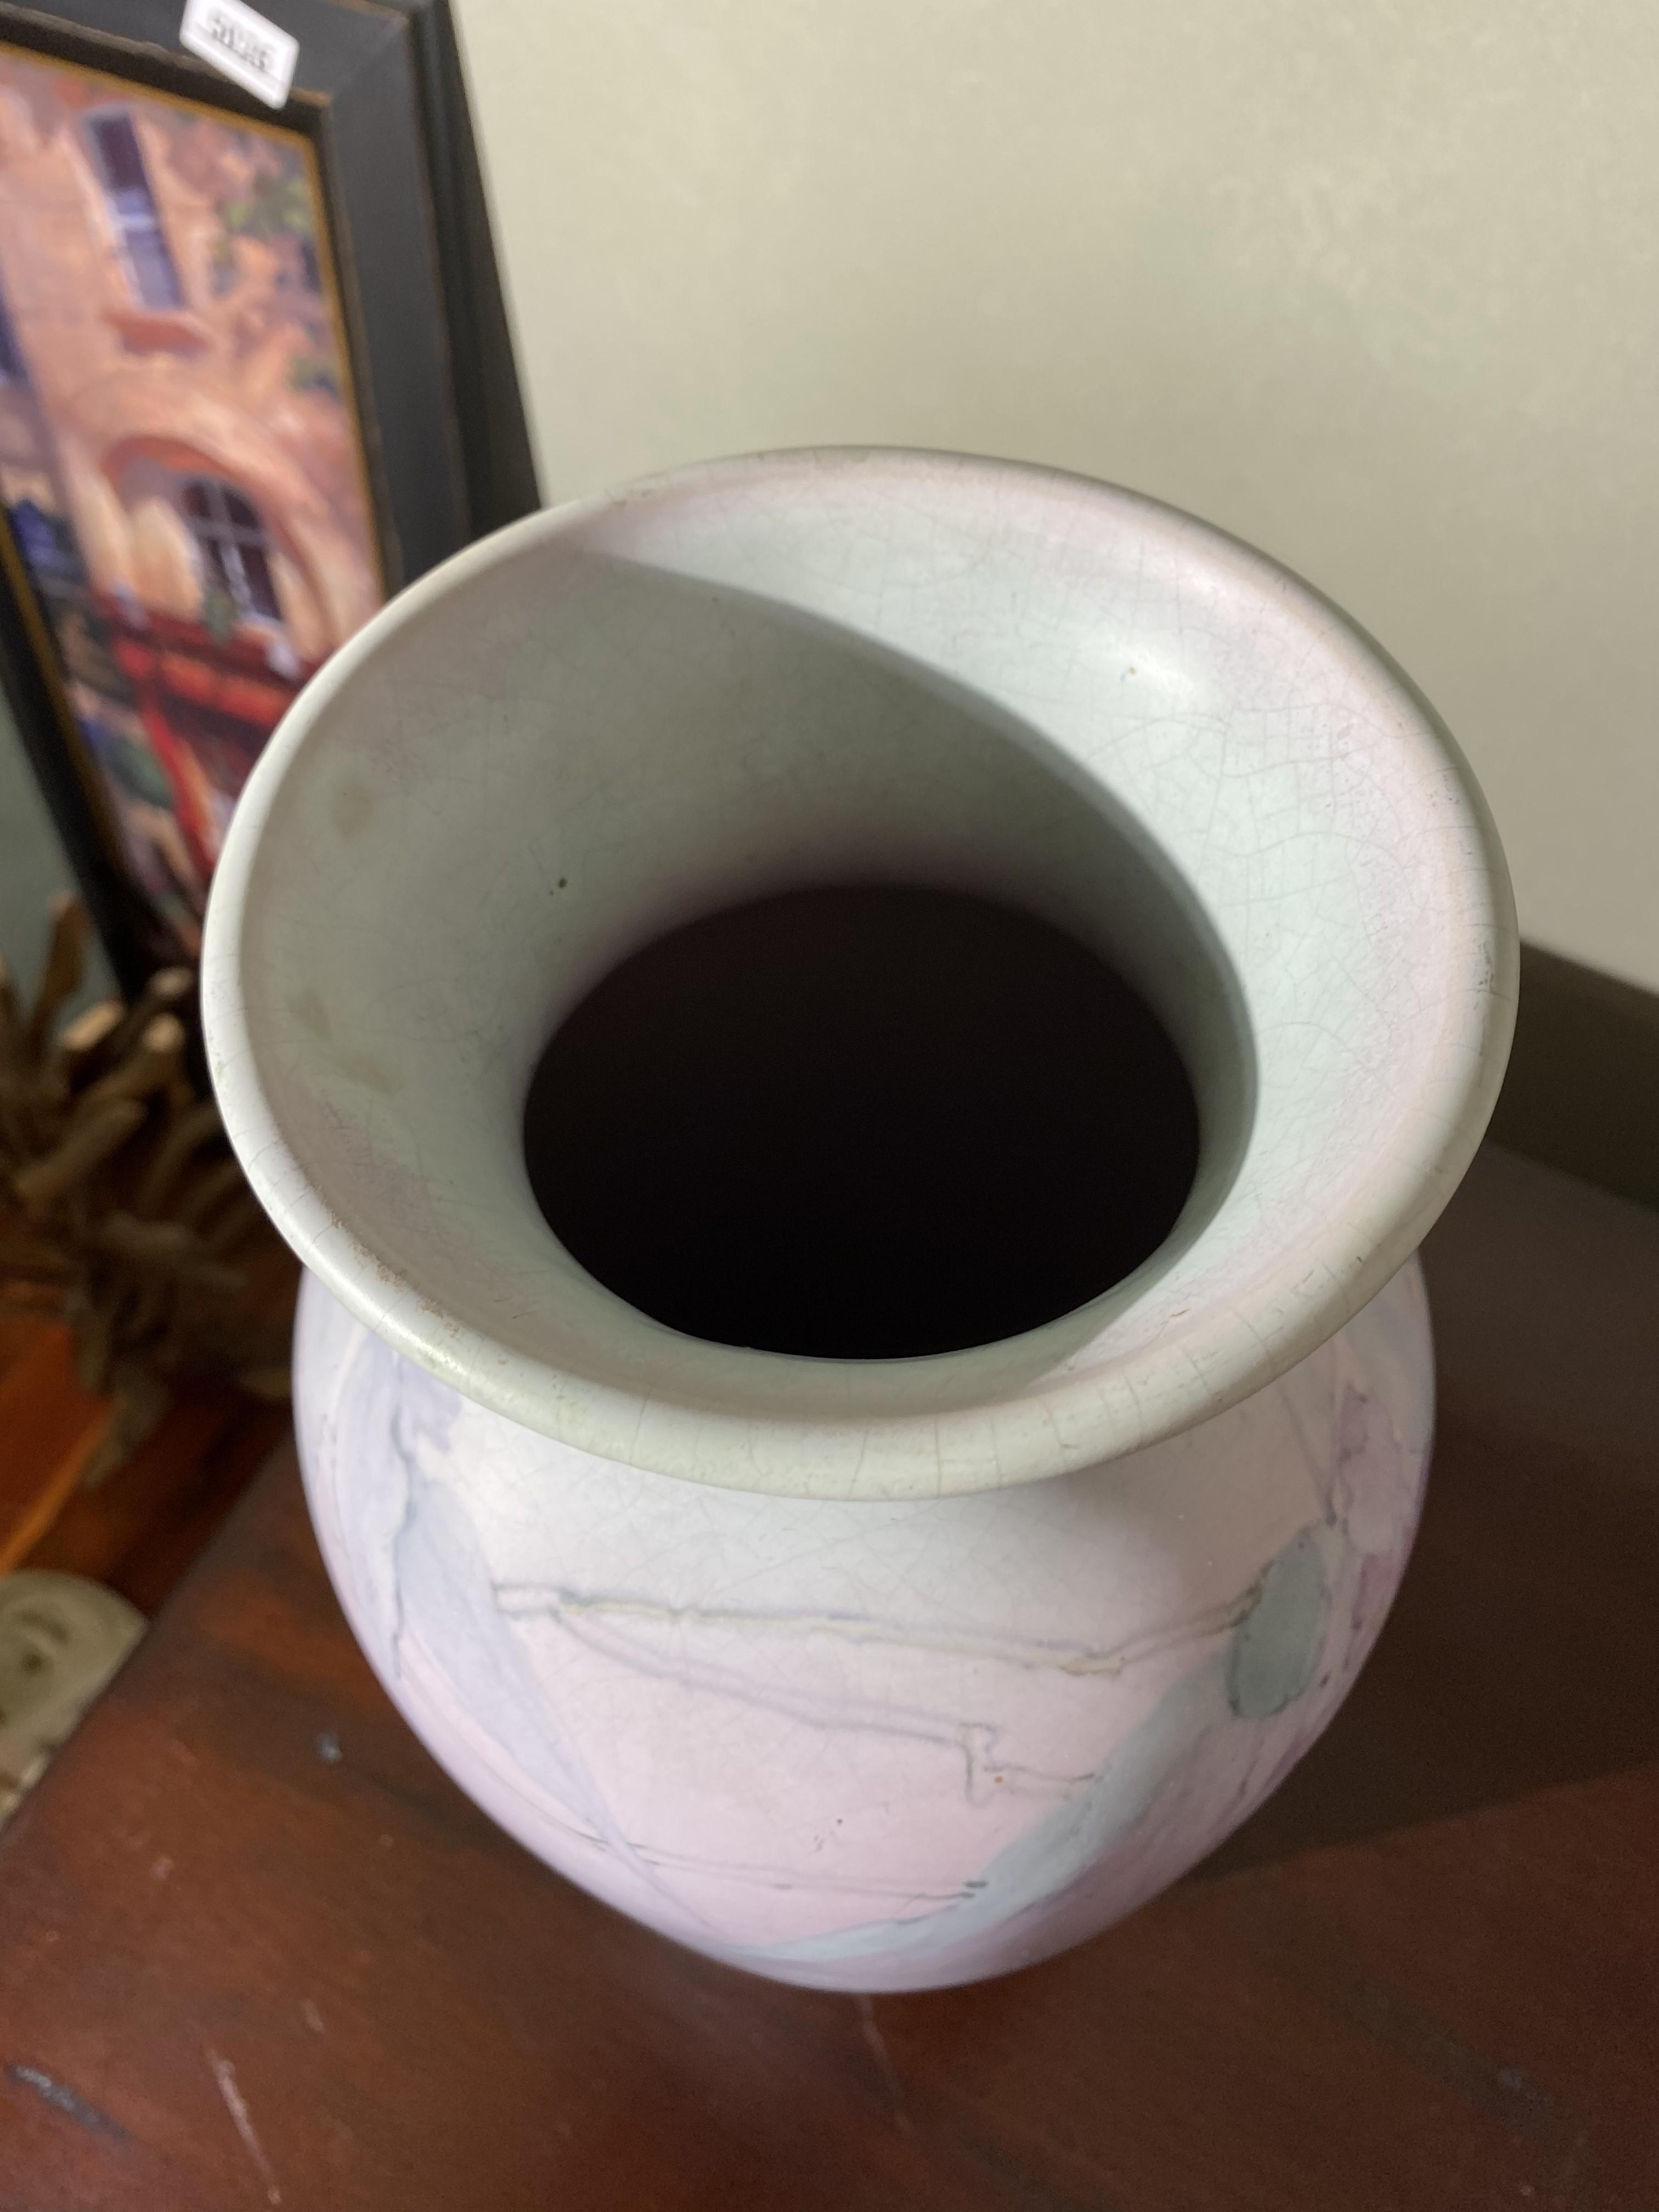 Rare Weller Art Pottery Vase 15" high excellent condition